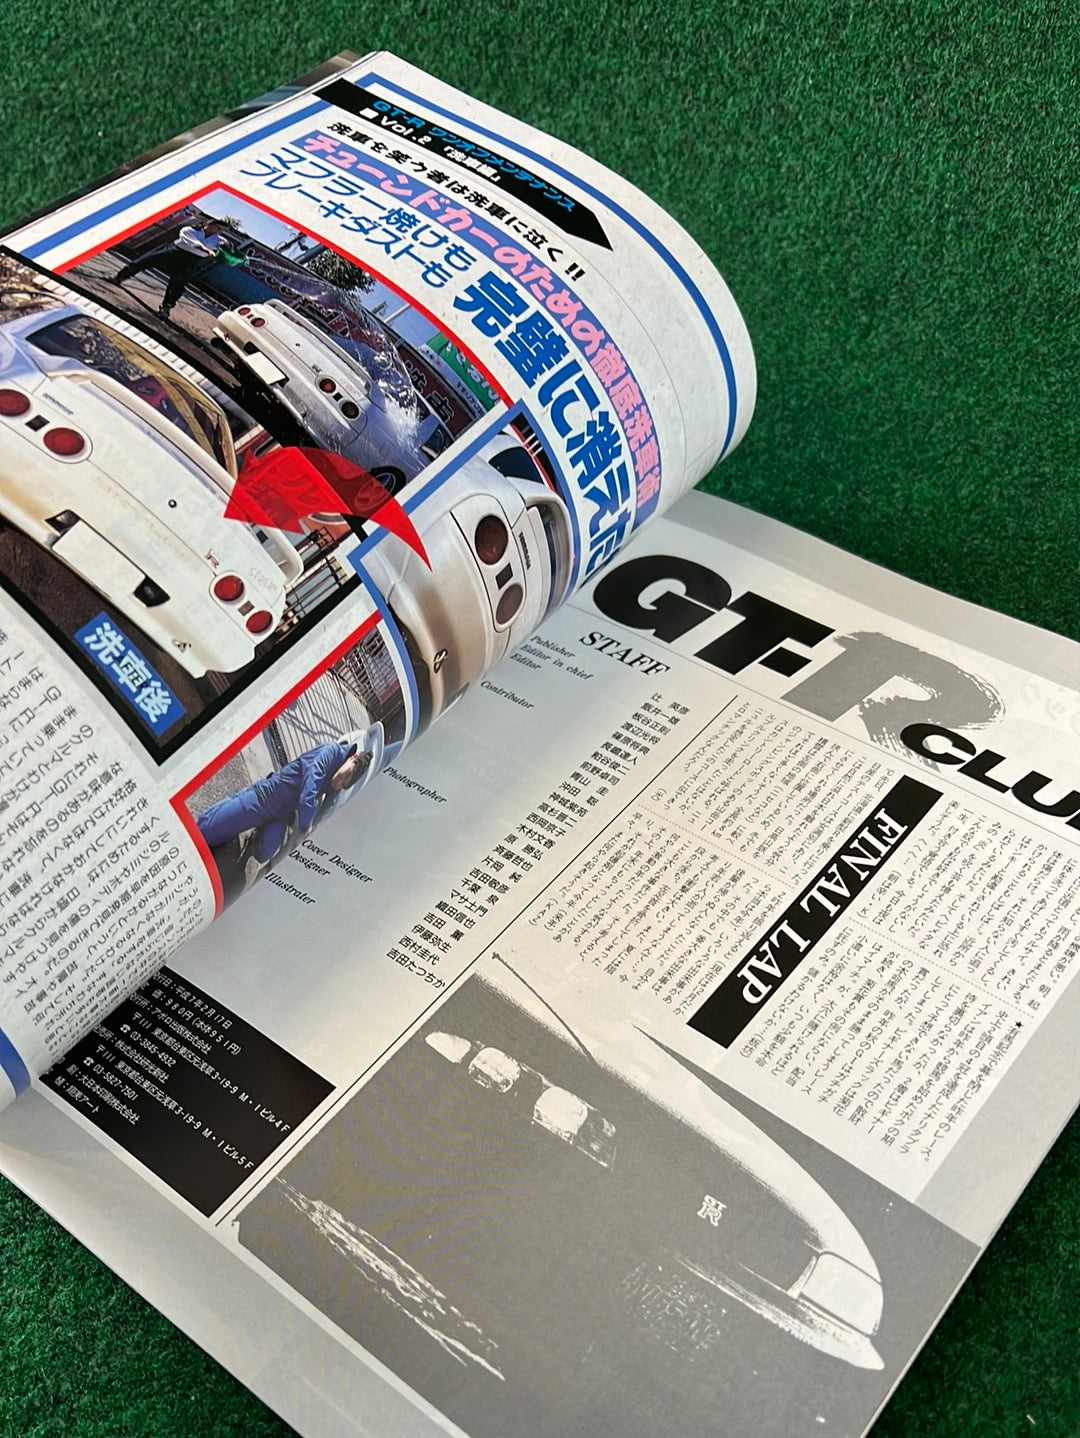 GT-R Club Magazine Vol. 1, 2 & 3 Set